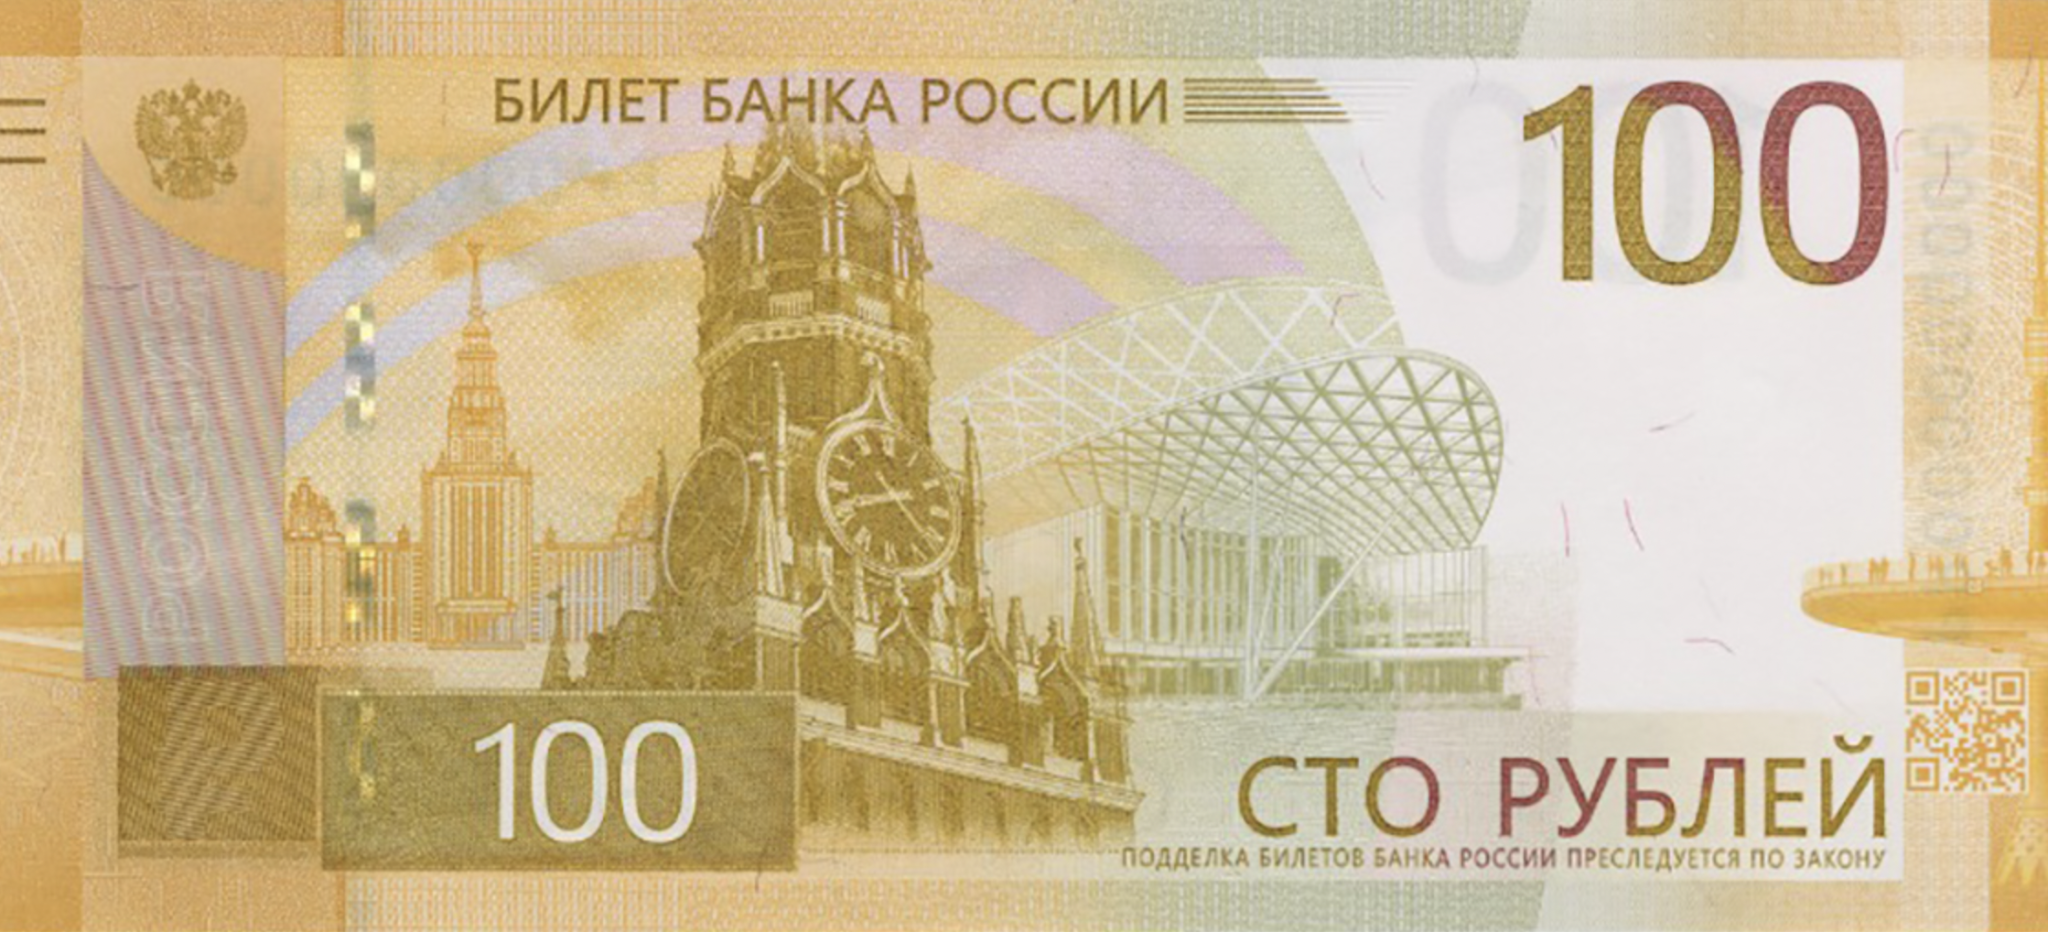 100 рублей на steam фото 94